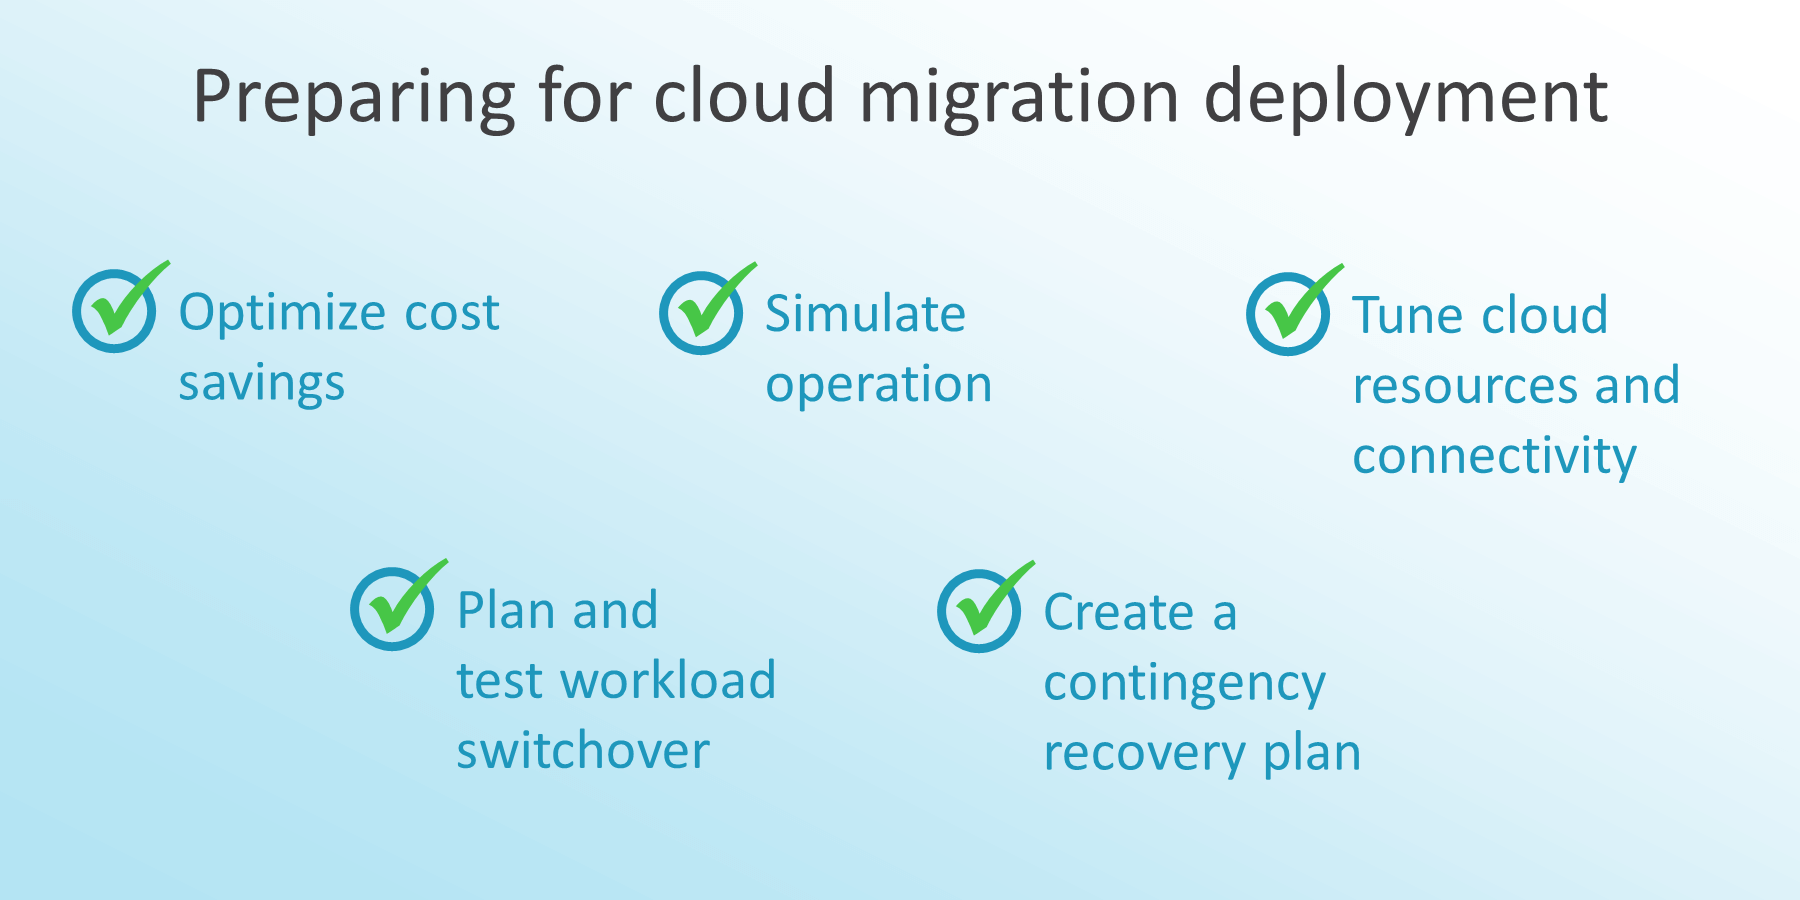 Preparing for cloud migration deployment